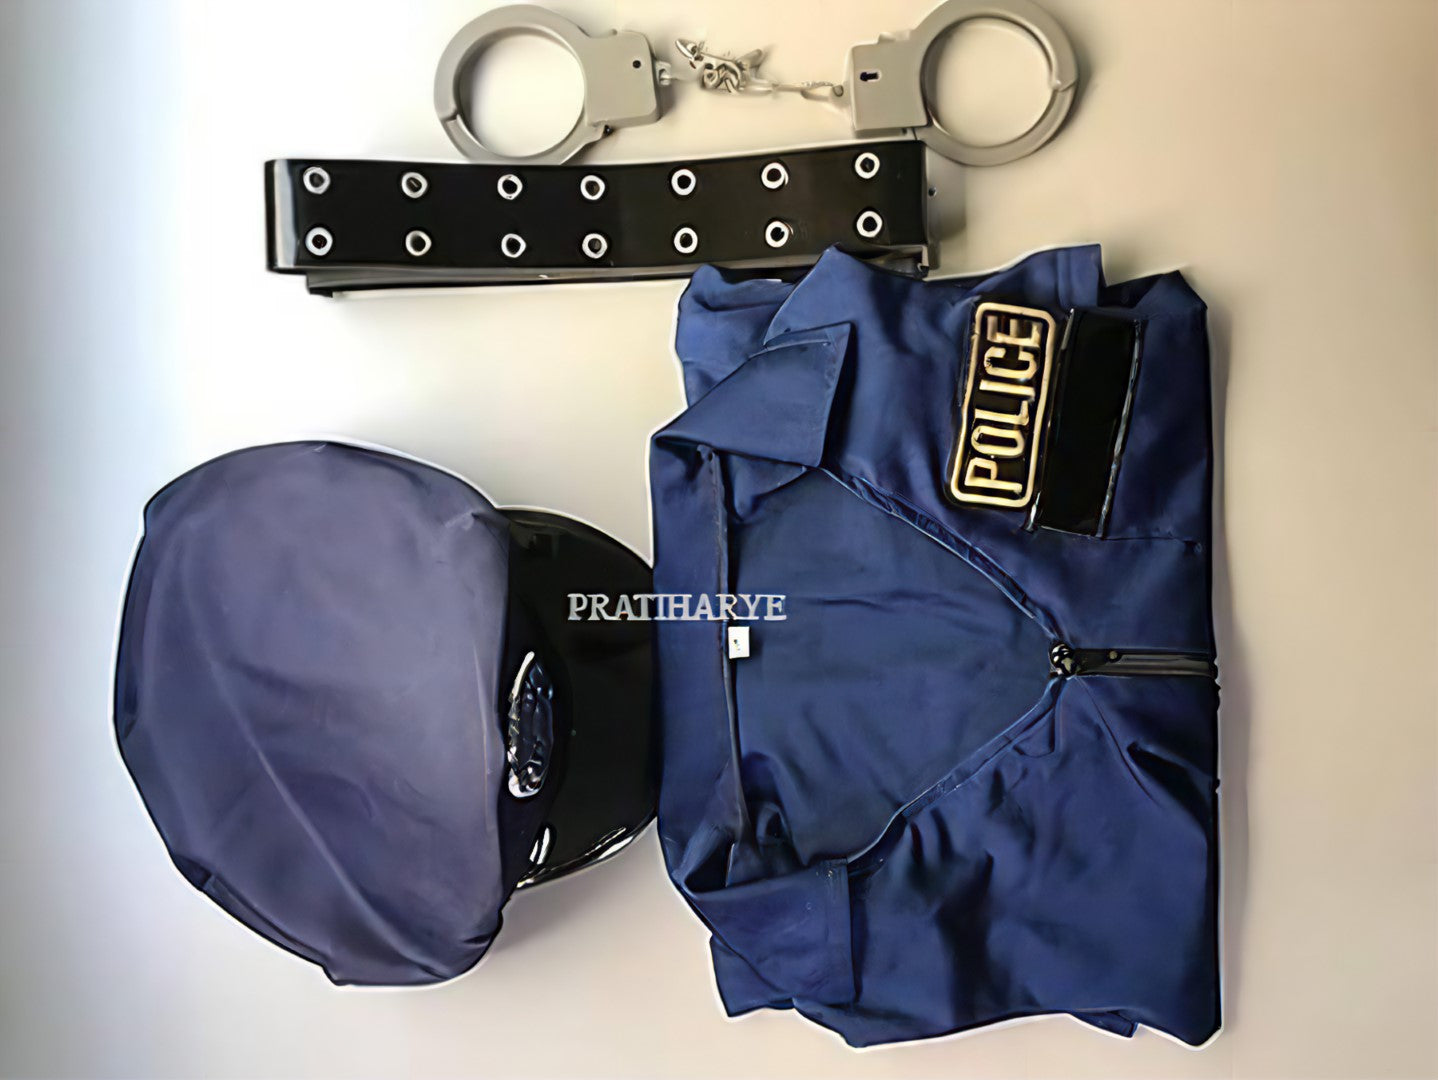  4pc Cop Costume Set with Handcuff & Cap - Pratiharye